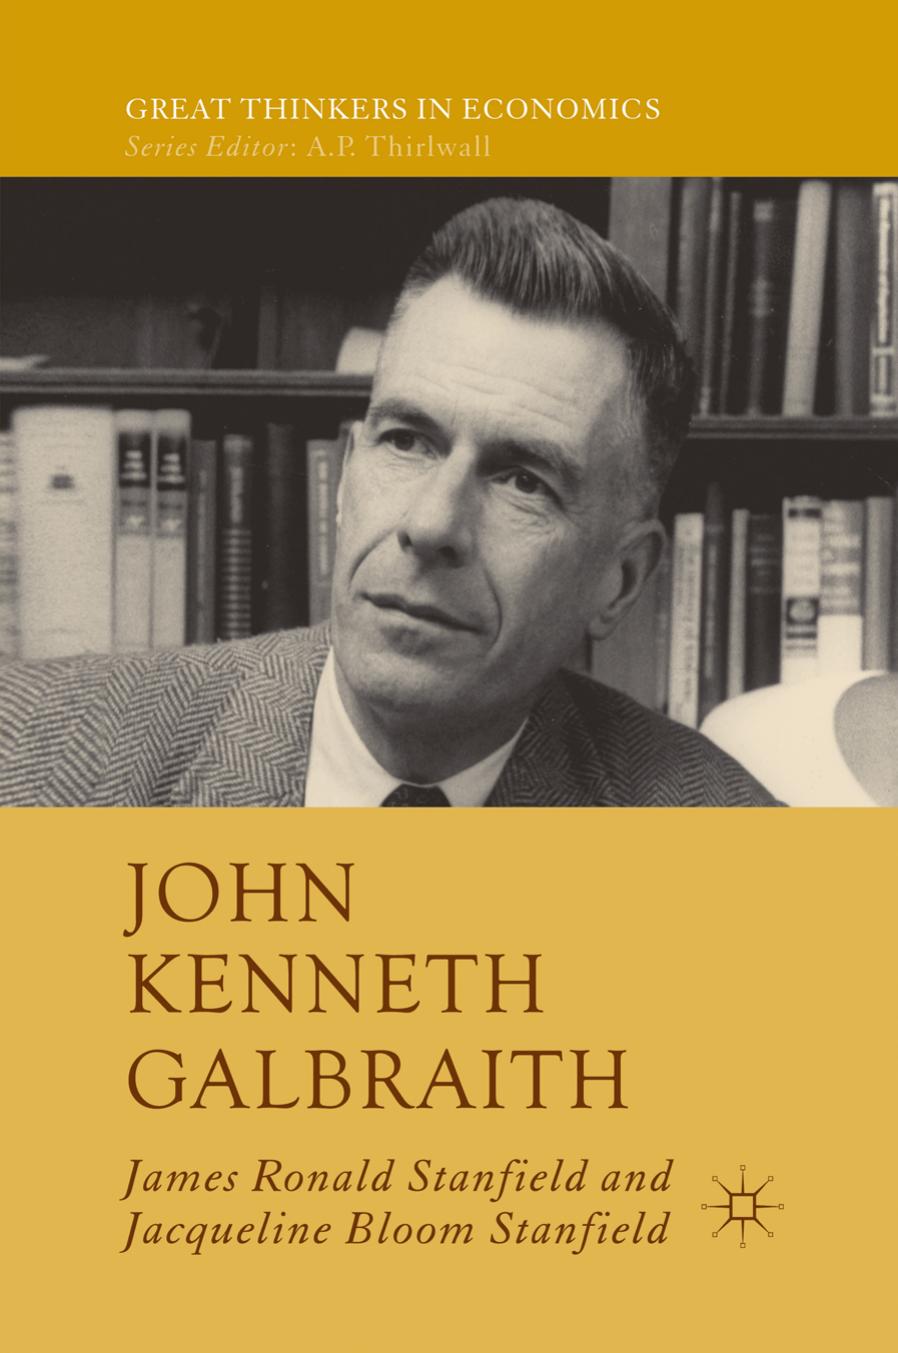 John Kenneth Galbraith